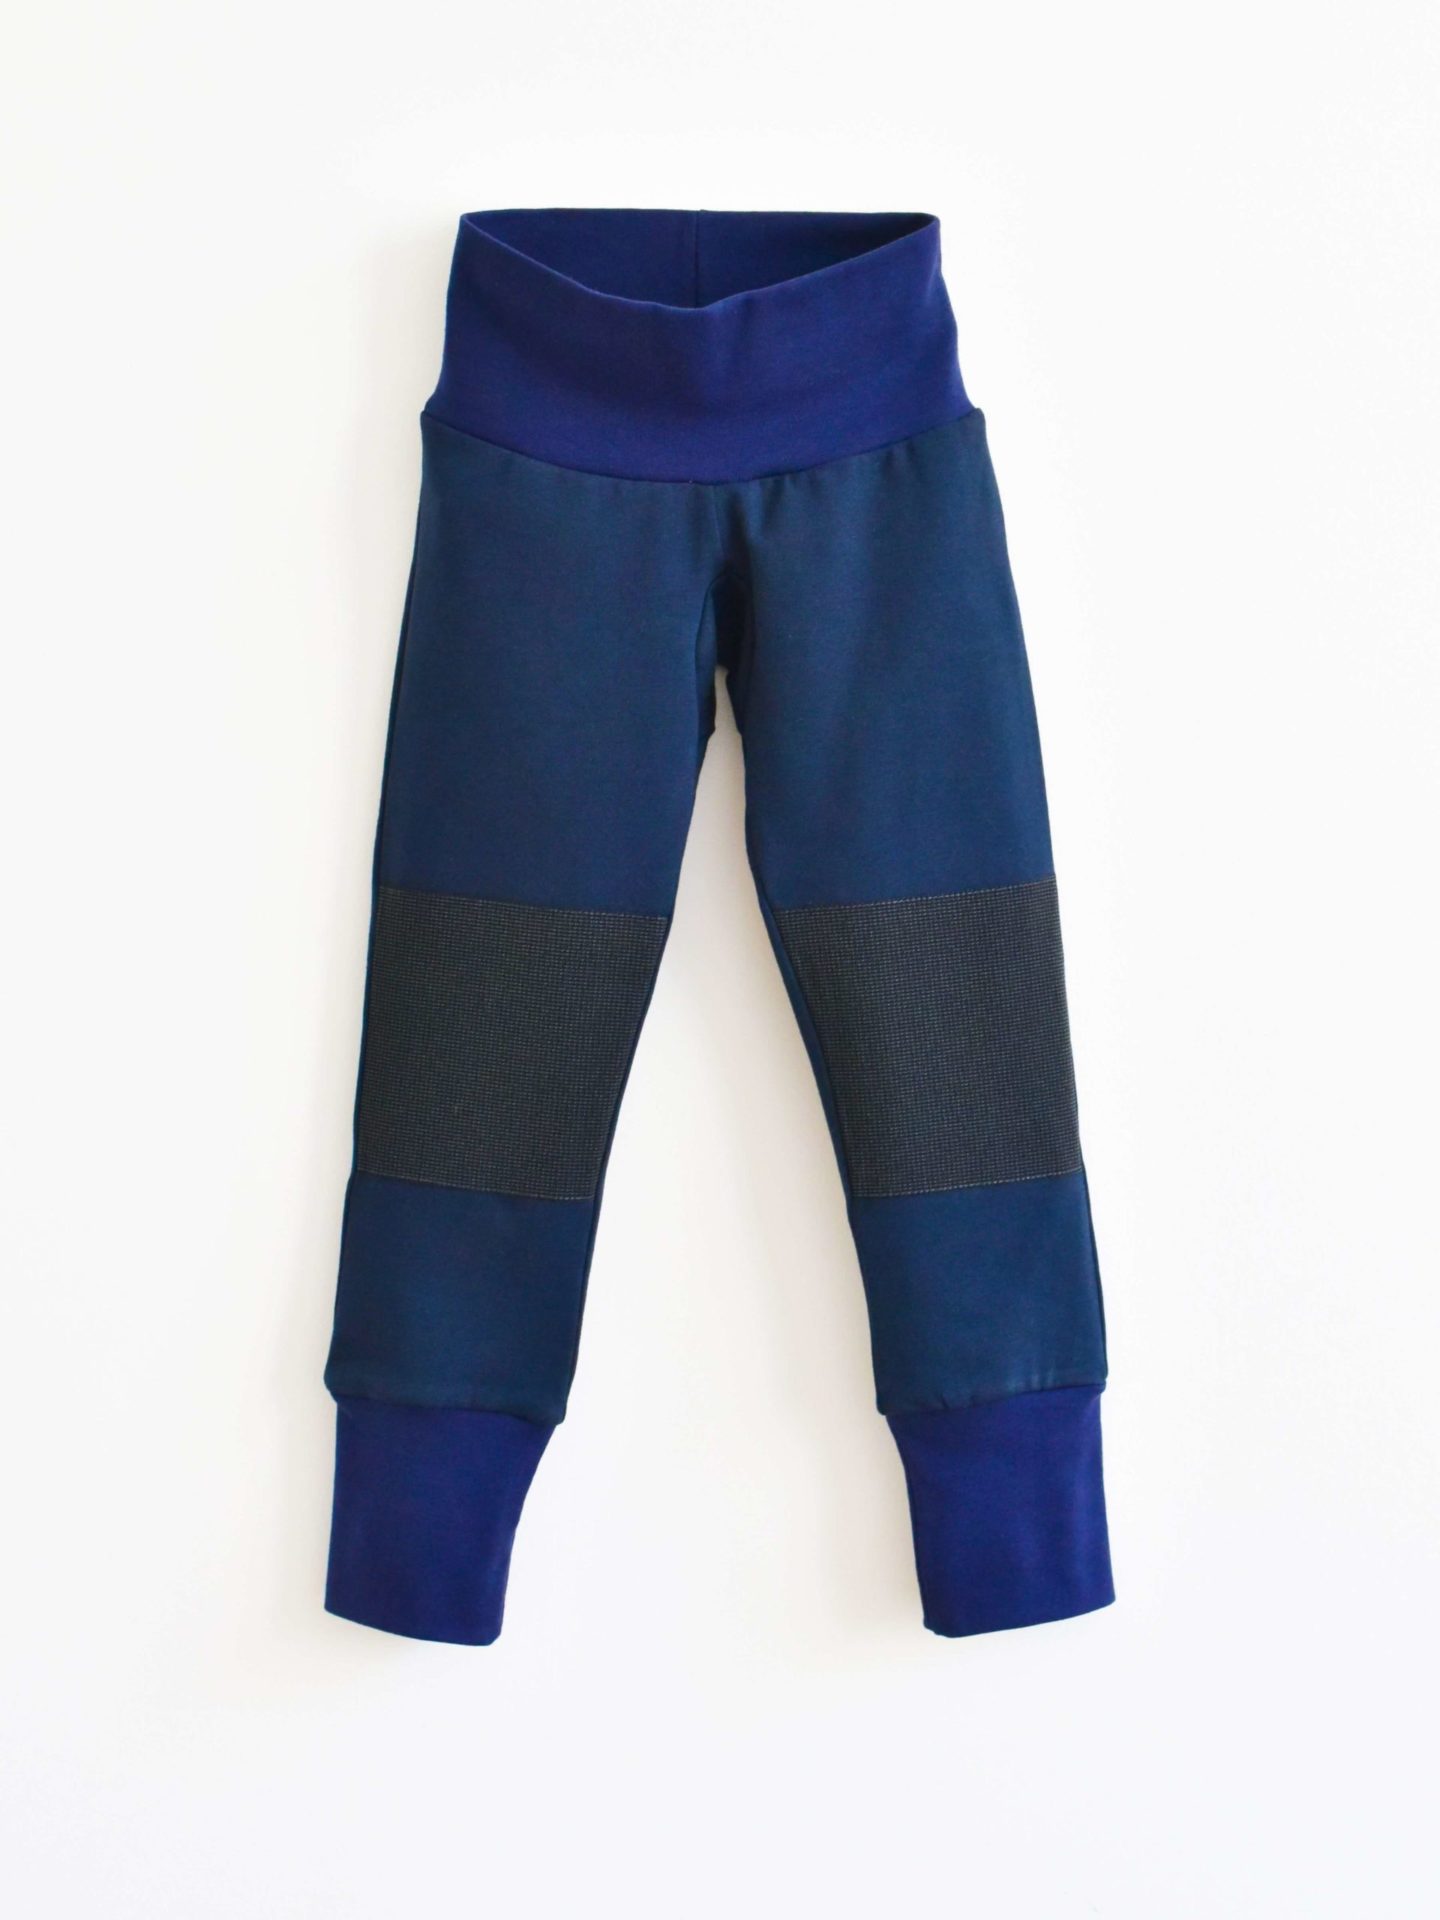 Children's Thermal Leggings • Durable to wear all winter • Buy online